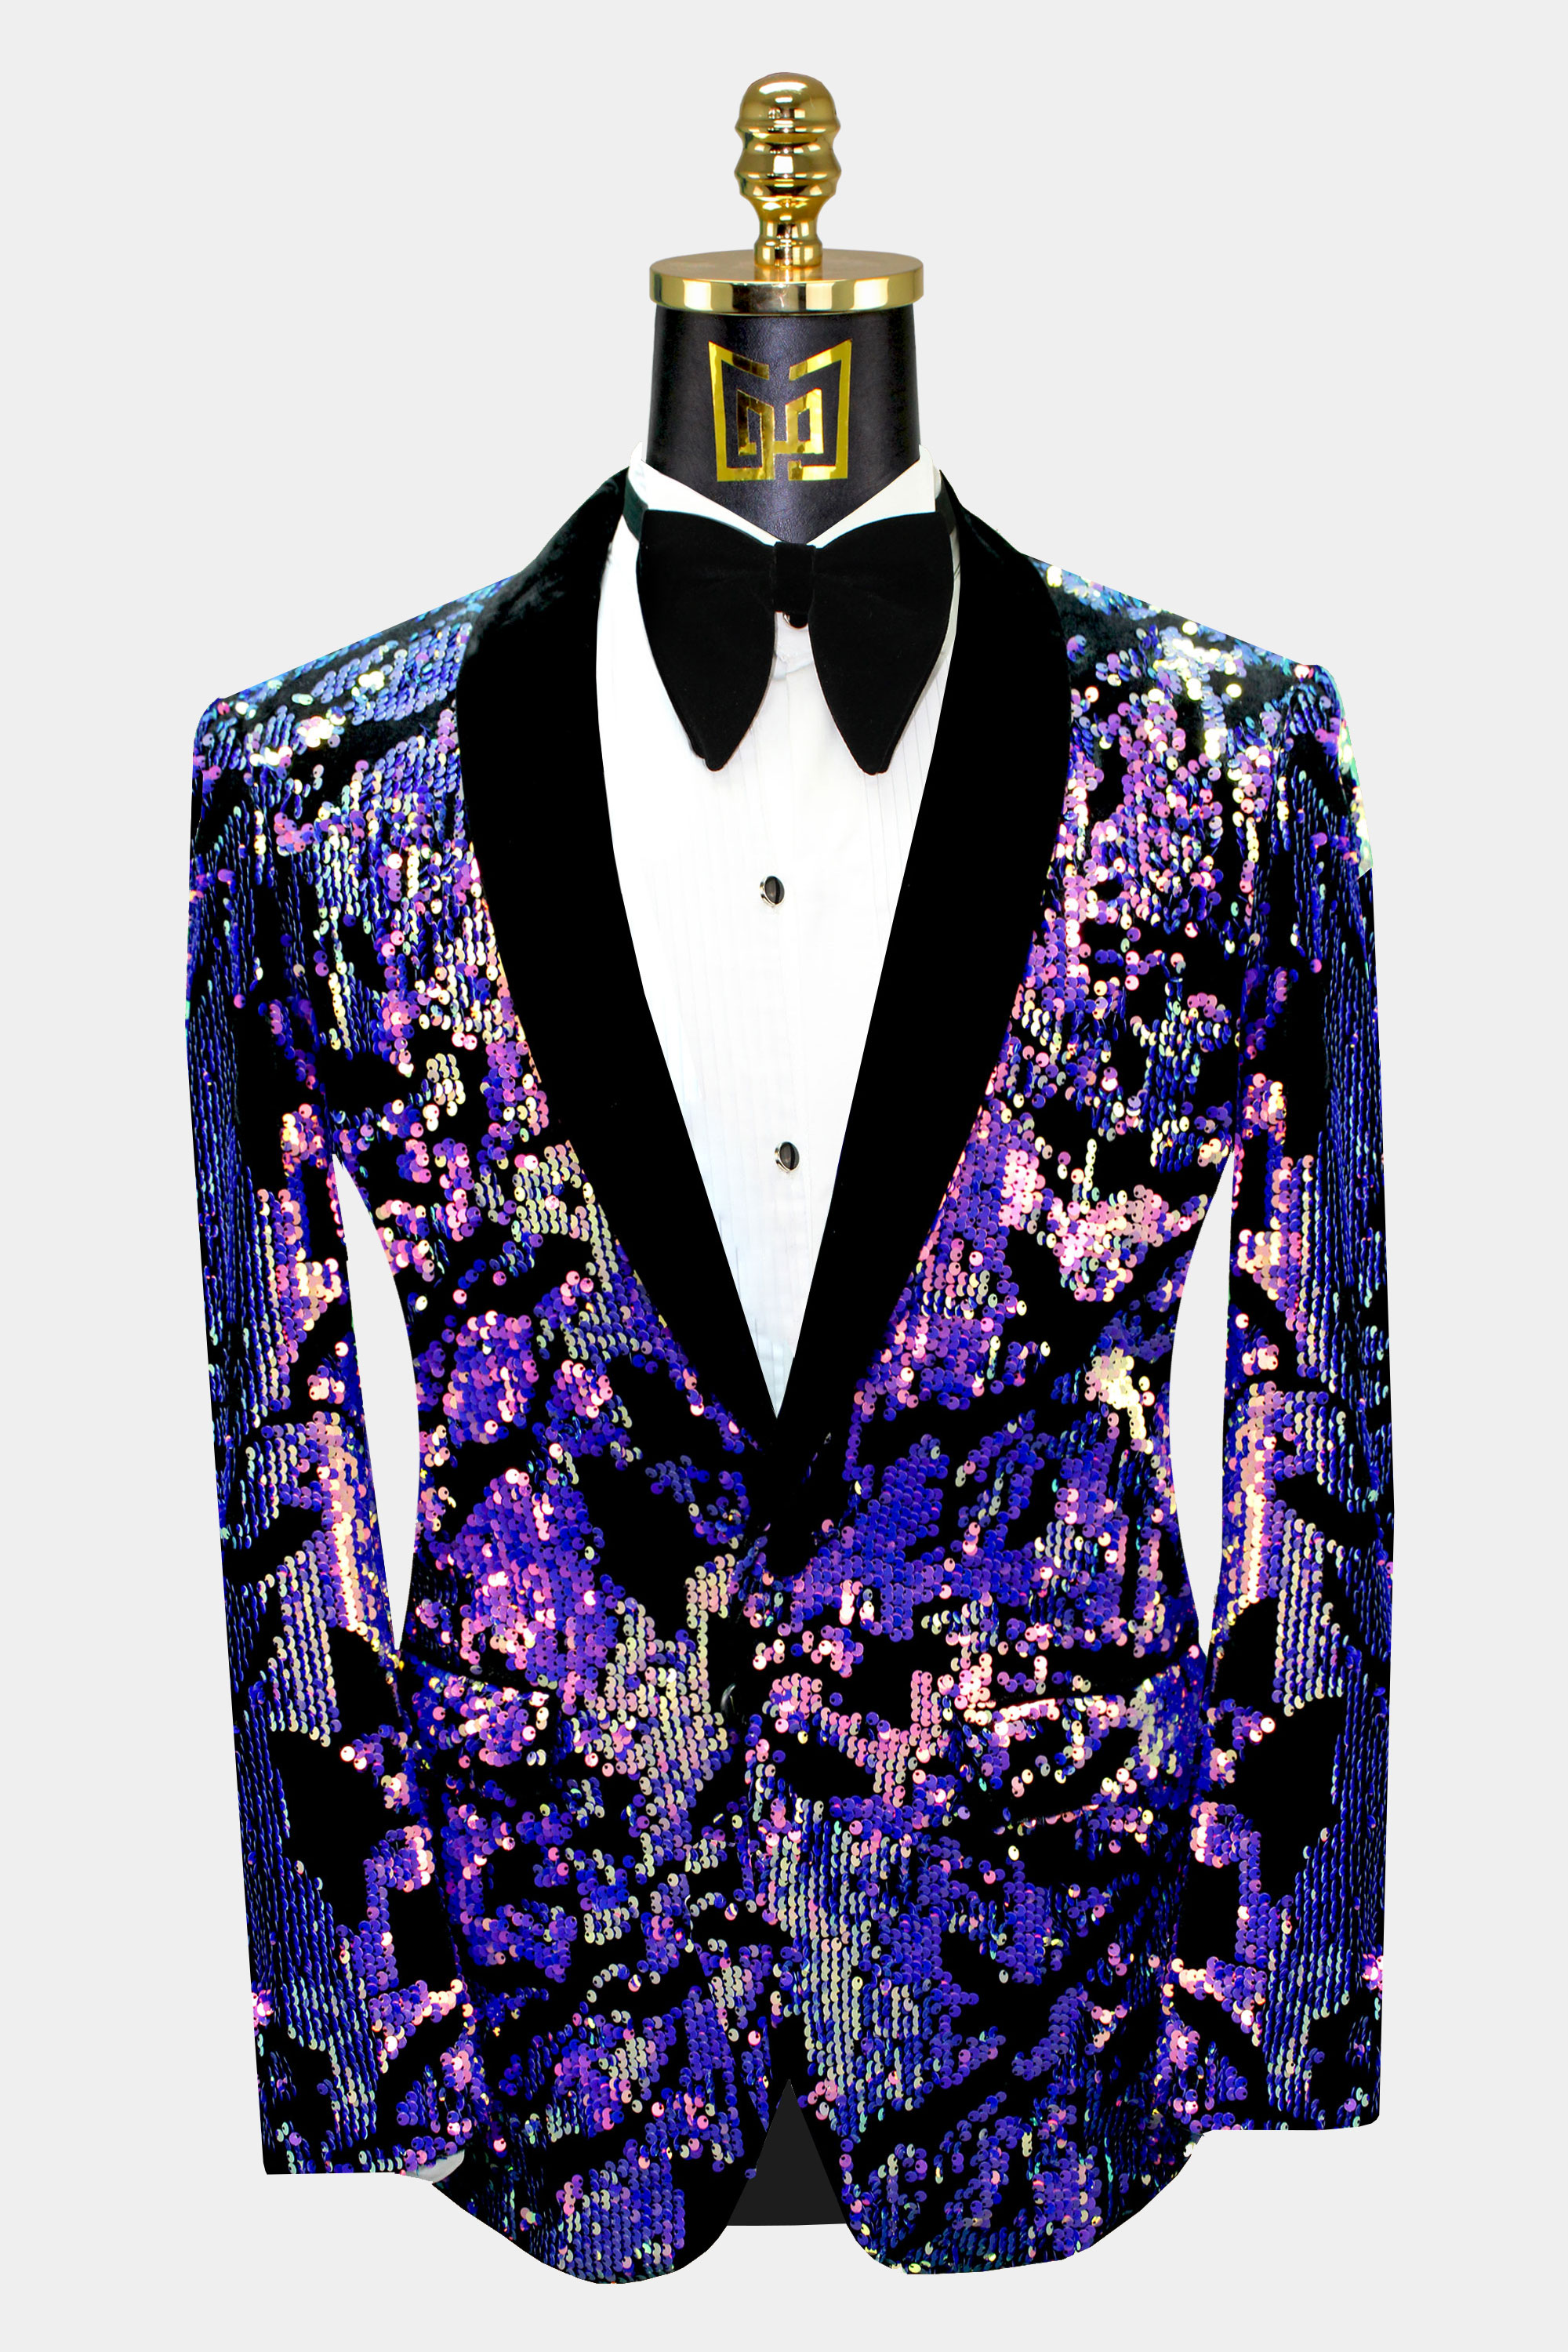 Mens-Multicolor-Sequin-Tuxedo-Jacket-Bling-Prom-Blazer-from-Gentlemansguru.com